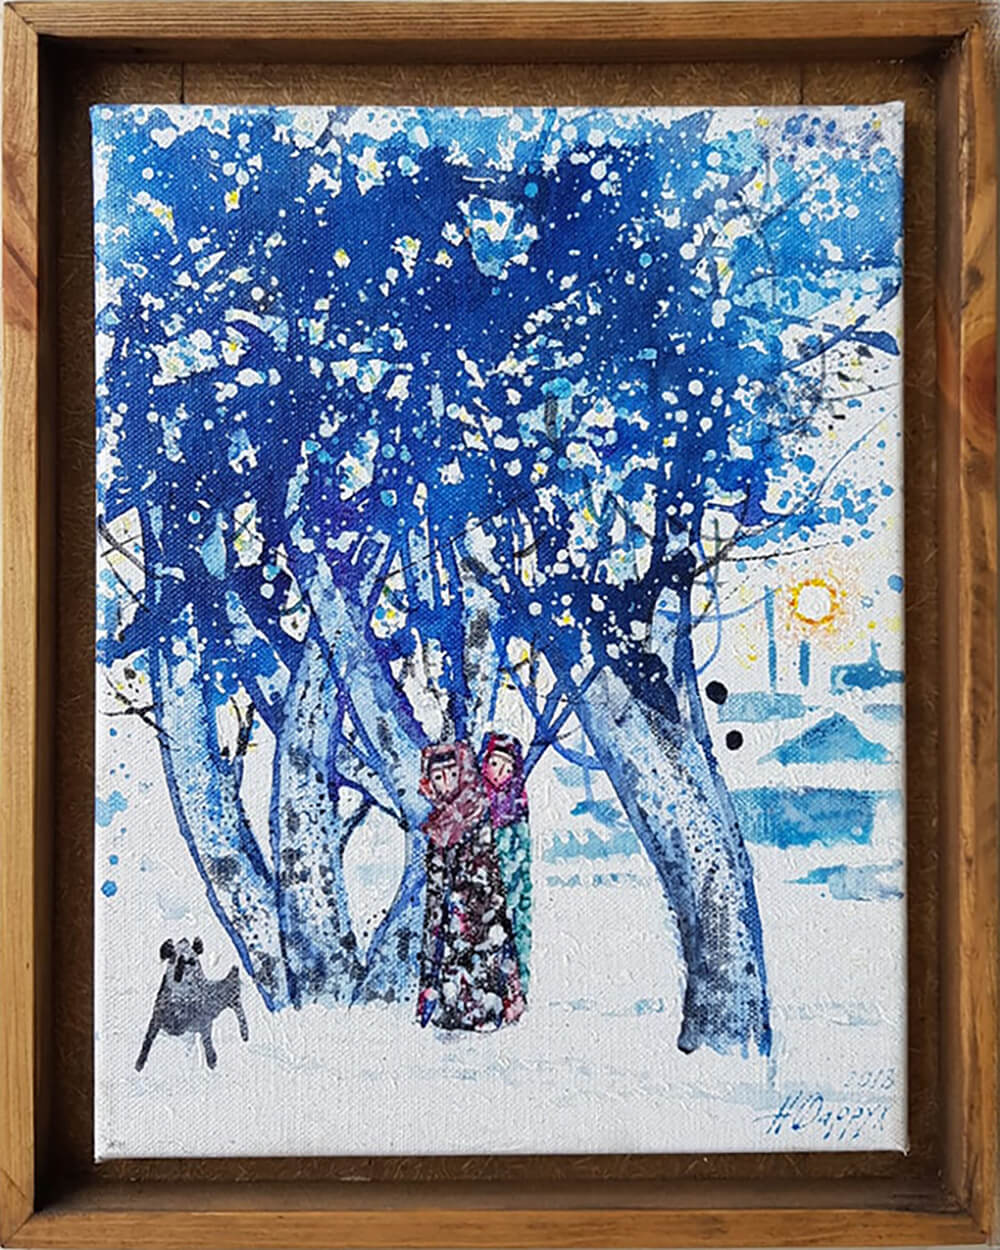 Buy painting online Singapore Exquisite Art Farrukh Negmatzade Frozen Winter Morning